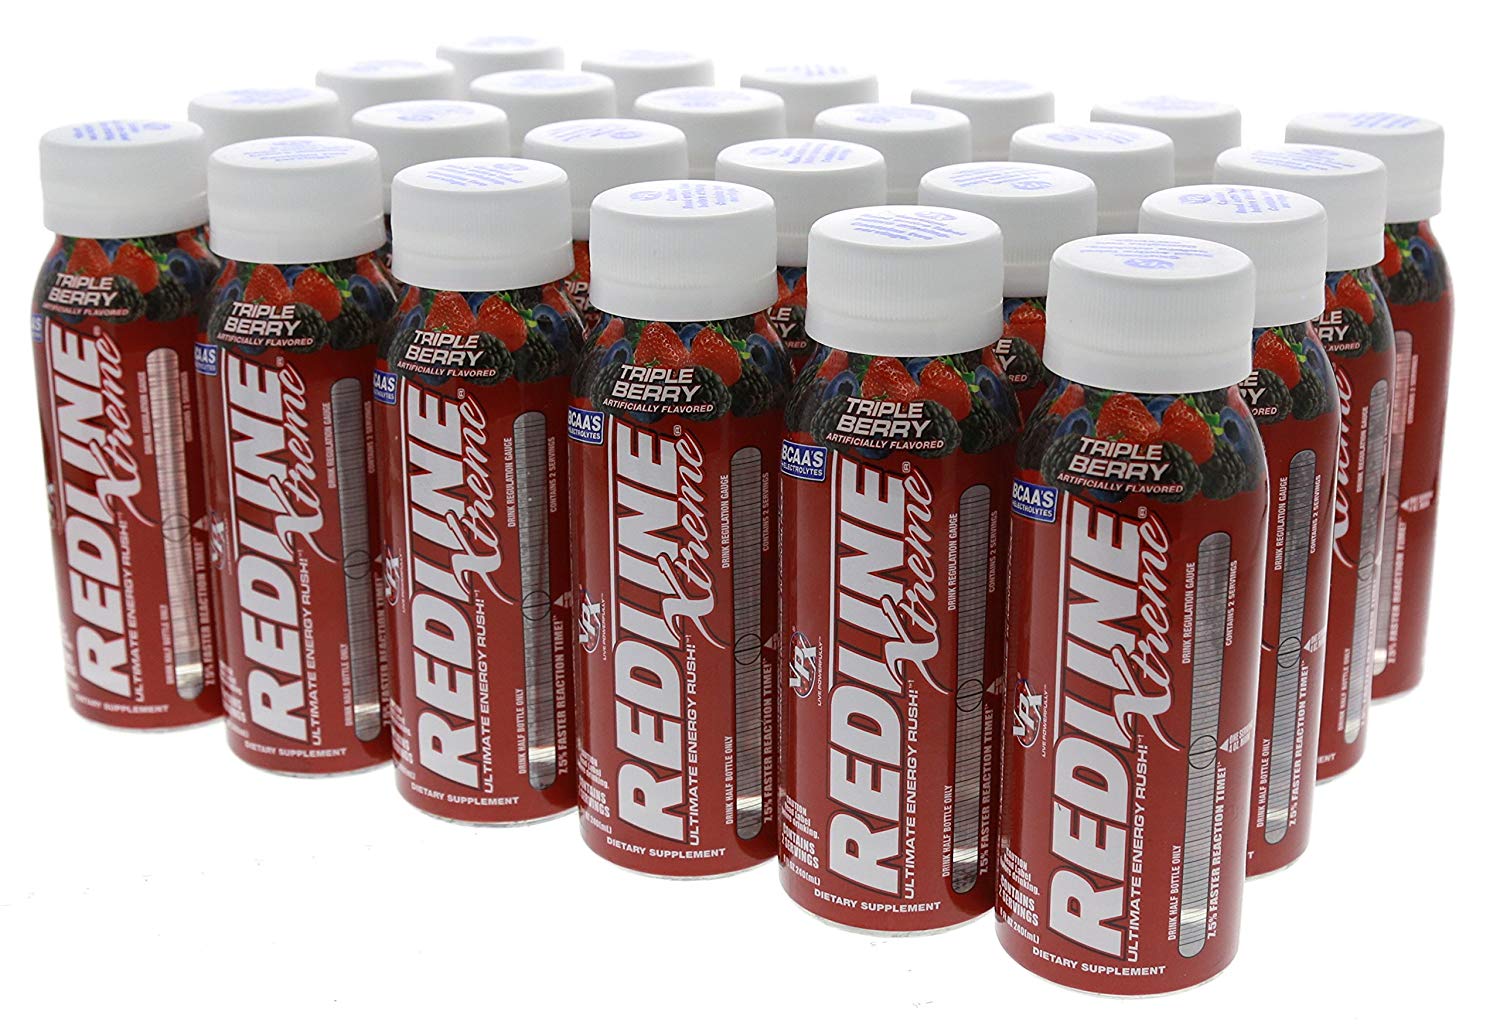 redline energy drink lawsuit